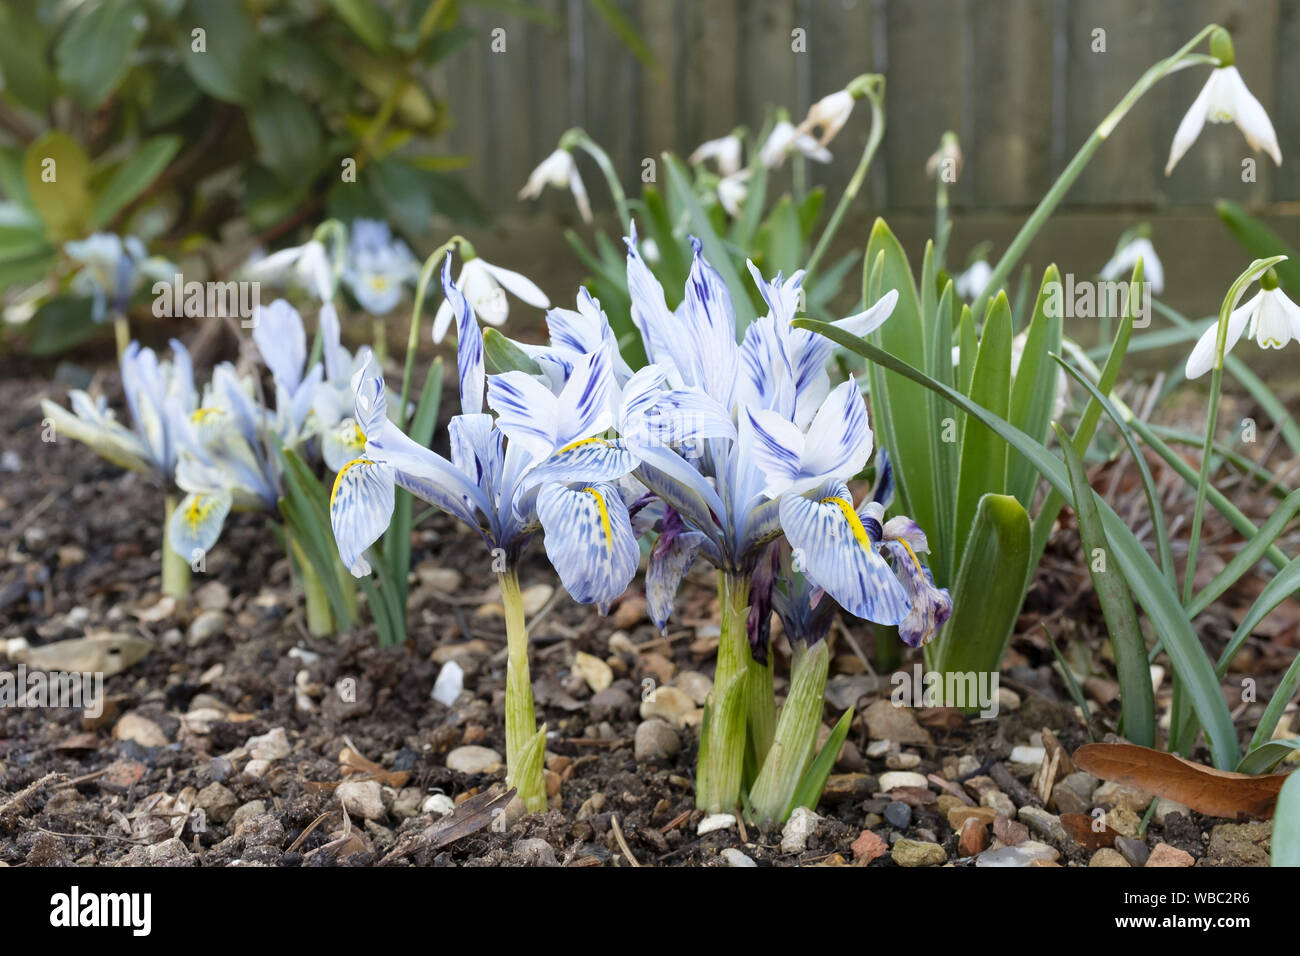 Dwarf iris flowers (Katharine Hodgkin) growing in a garden flowerbed, UK Stock Photo